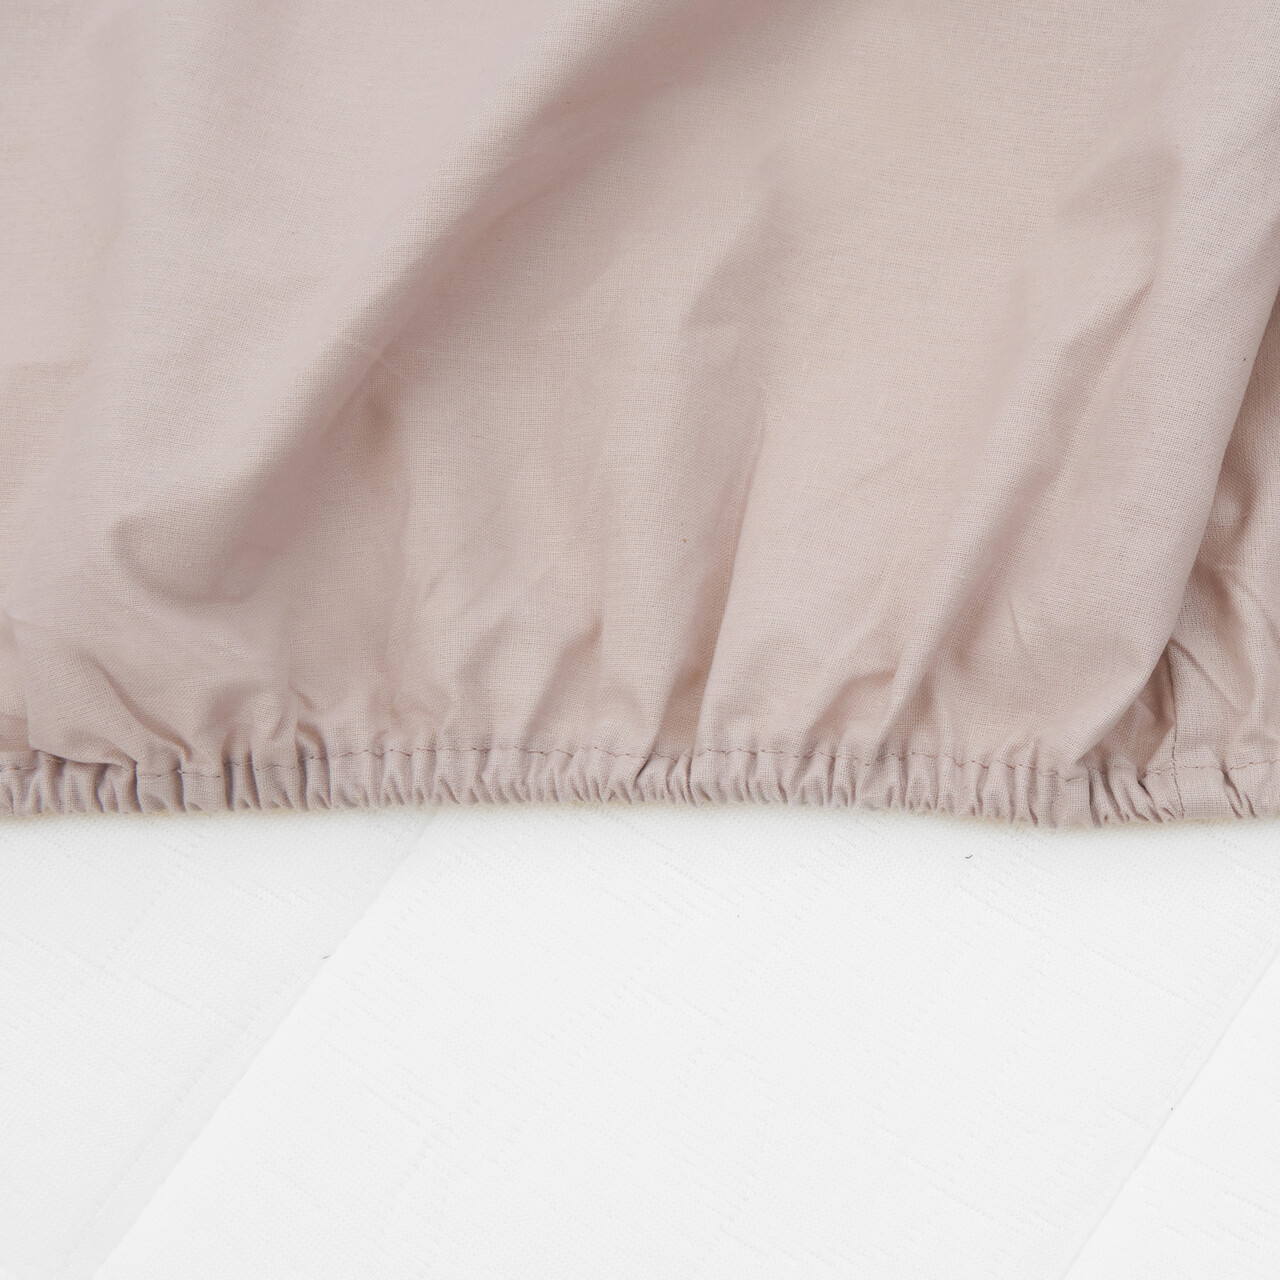 Cearceaf de pat cu elastic Heinner Home, 180x200 cm, bumbac, crem